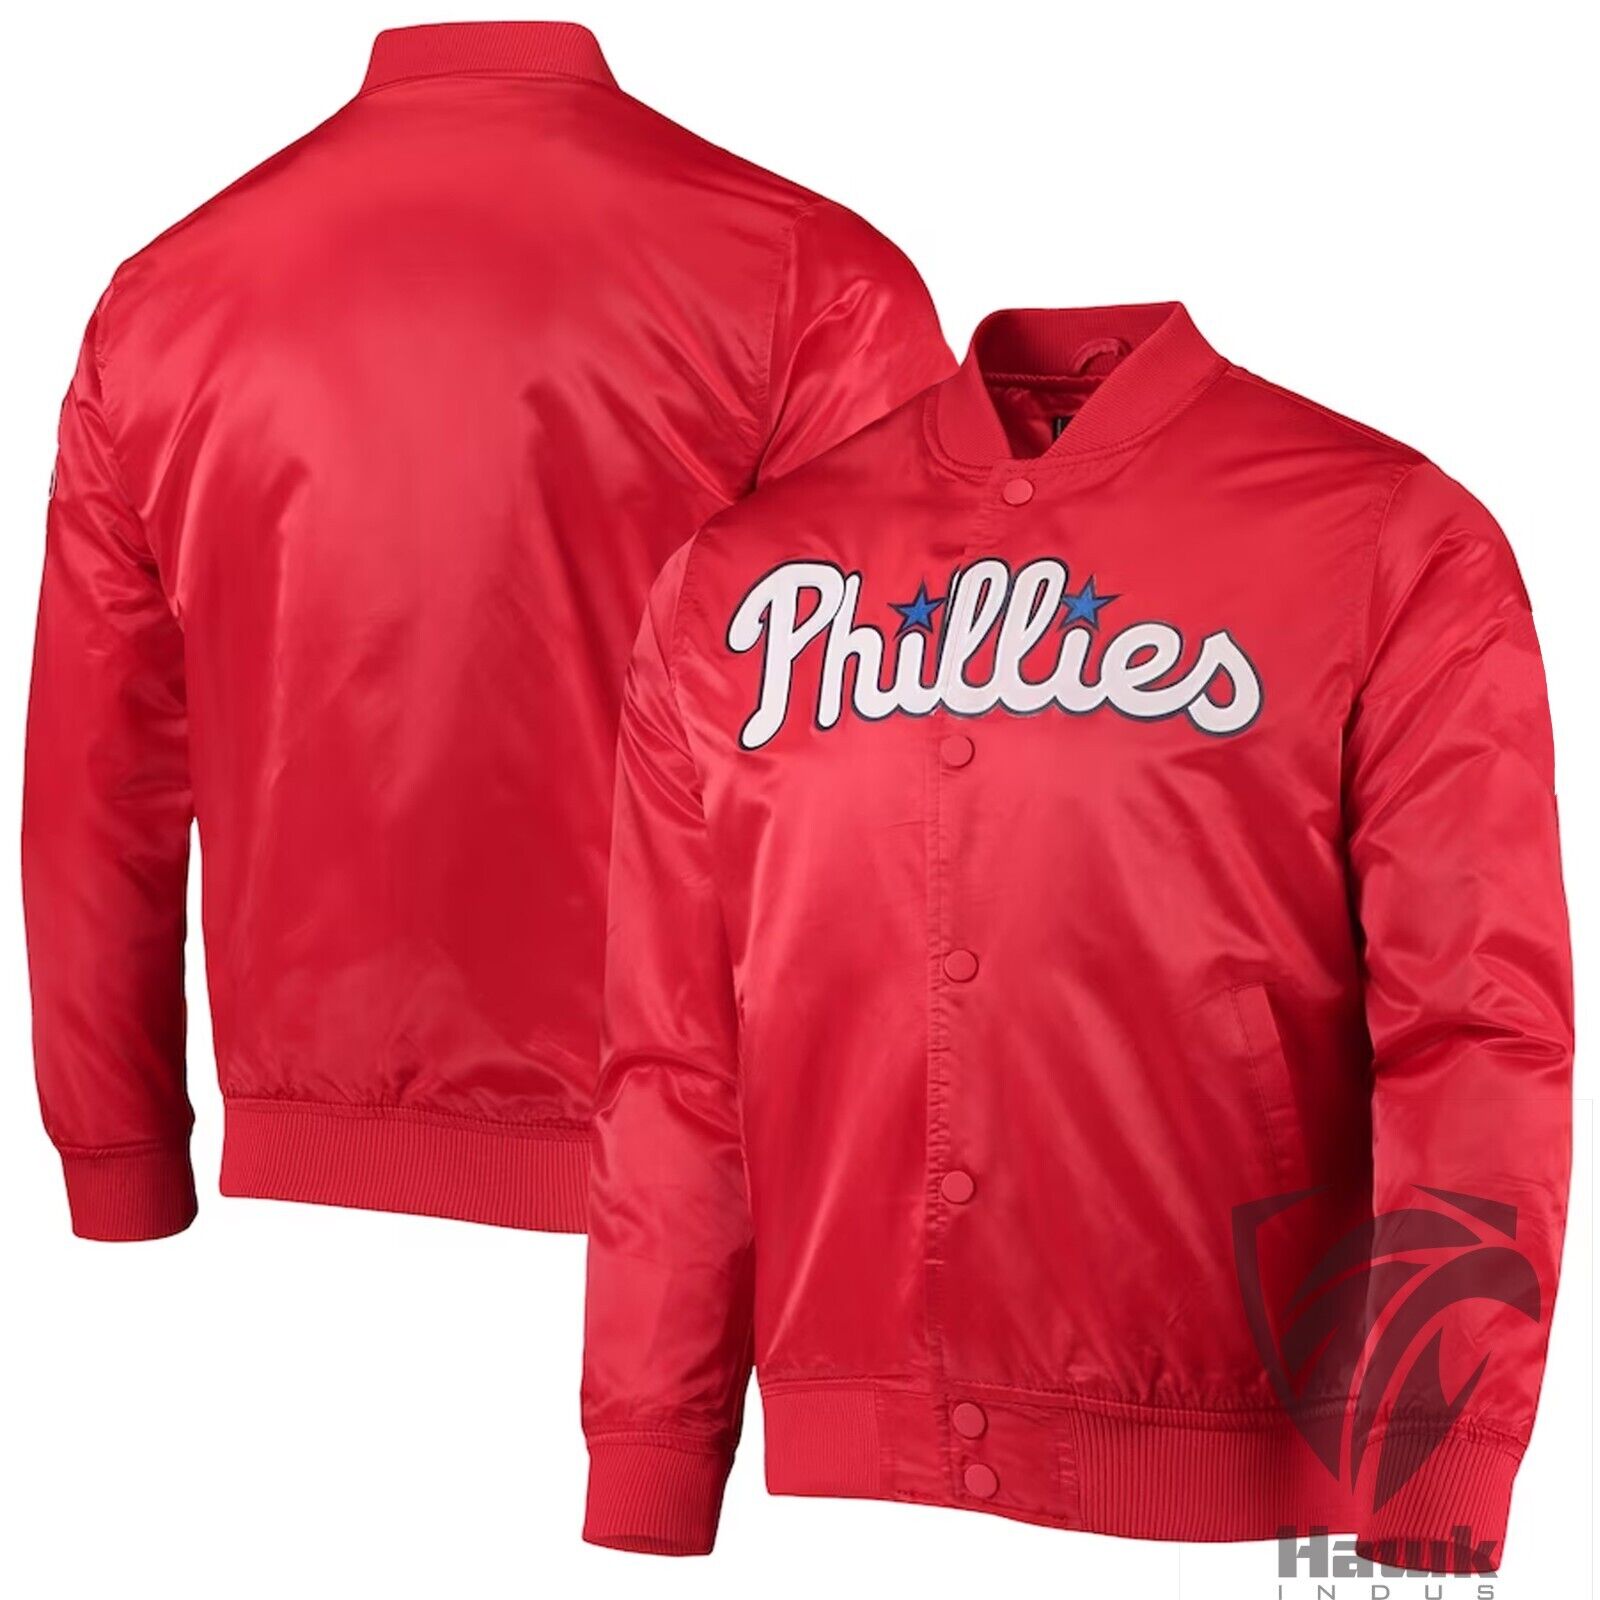 Philadelphia Phillies Red Satin Baseball Jacket Full-Snap with Embroidery logos